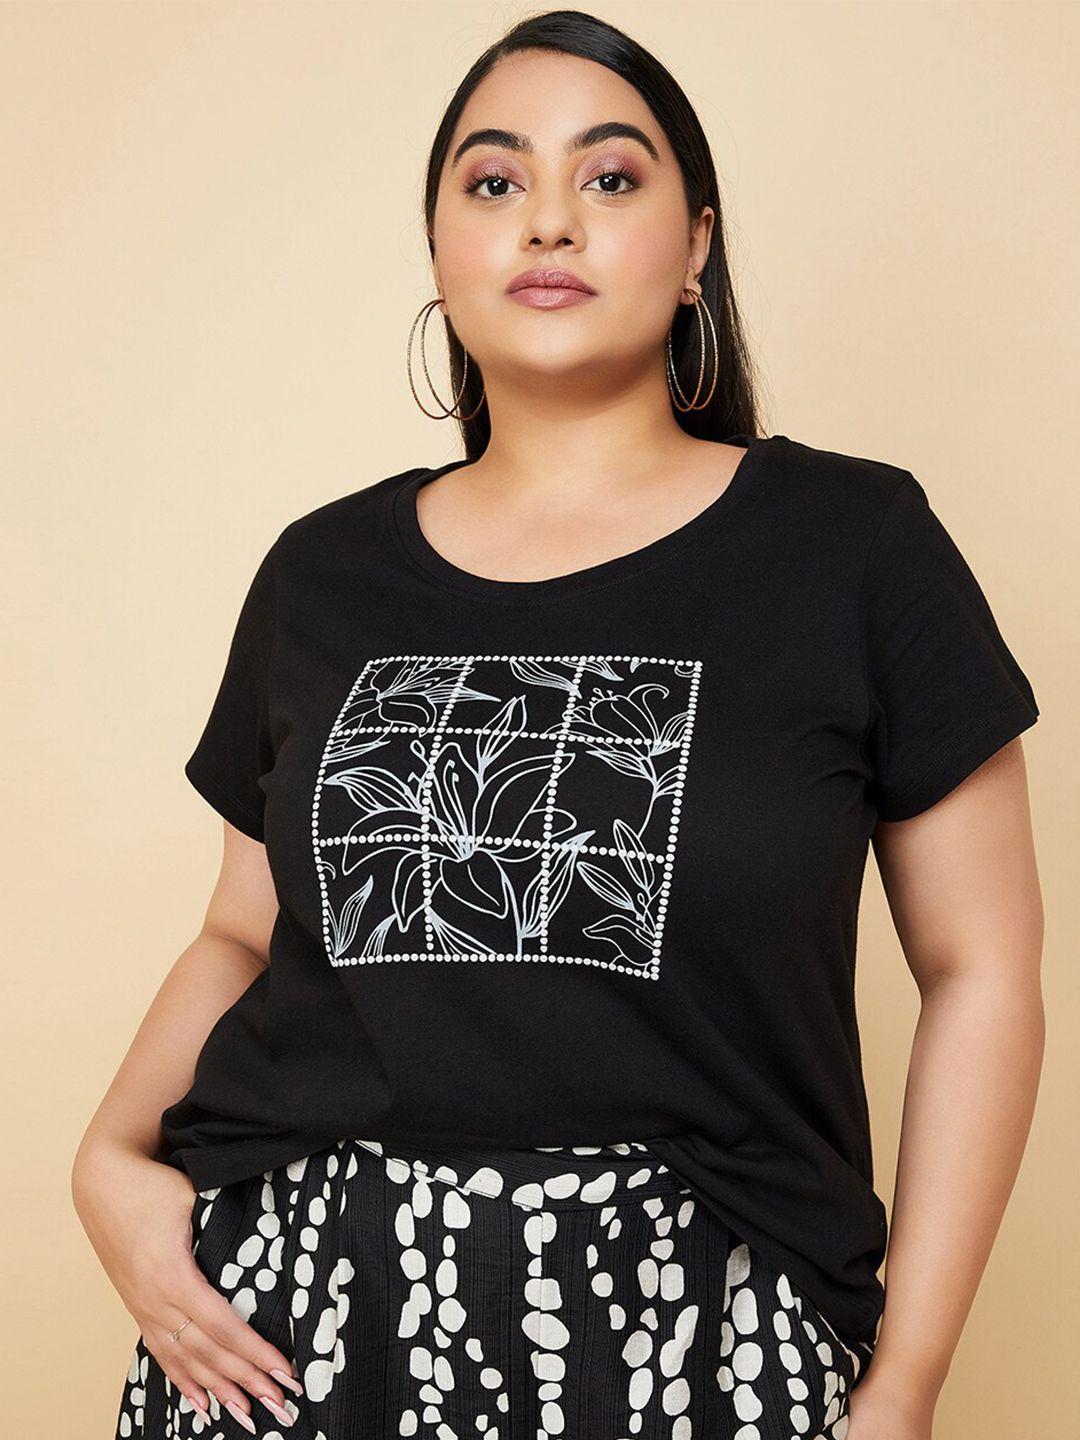 max-women-typography-printed-t-shirt